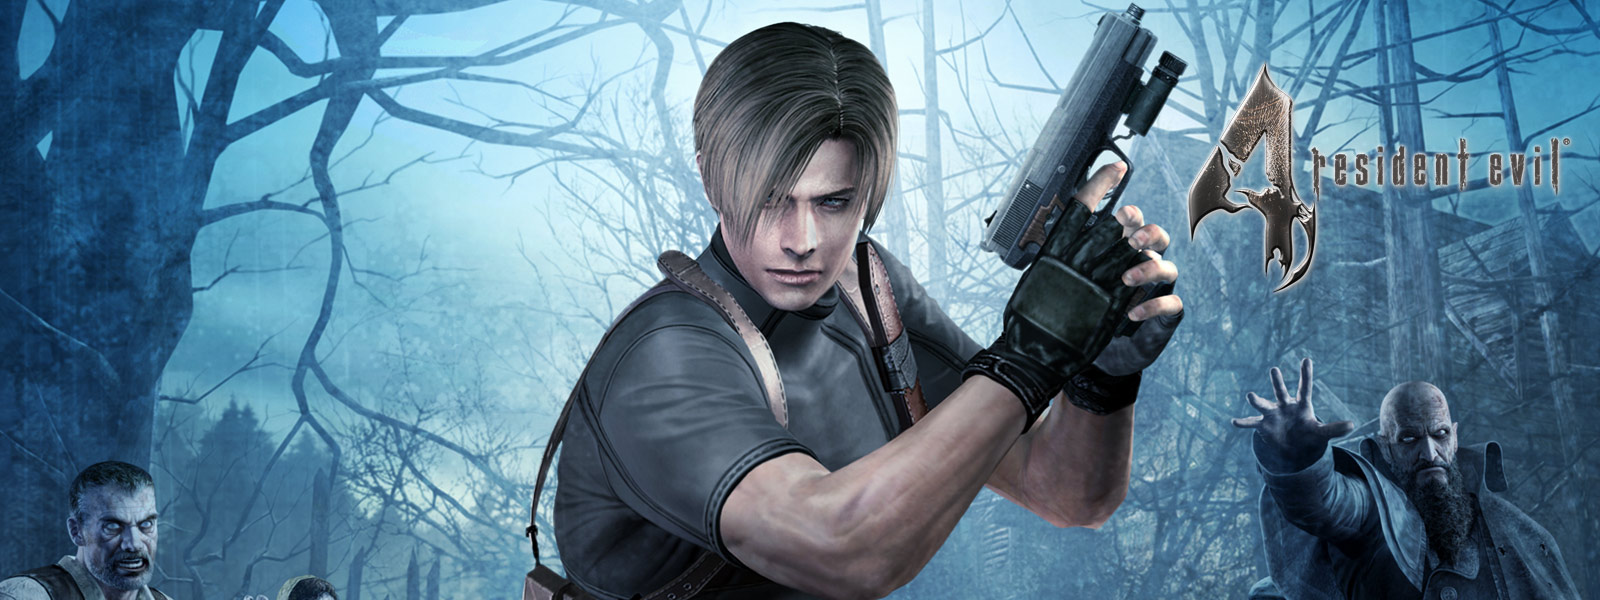 Resident Evil 4, ένας χαρακτήρας κρατά όπλο σε ένα σκοτεινό δάσος περικυκλωμένο από ζόμπι